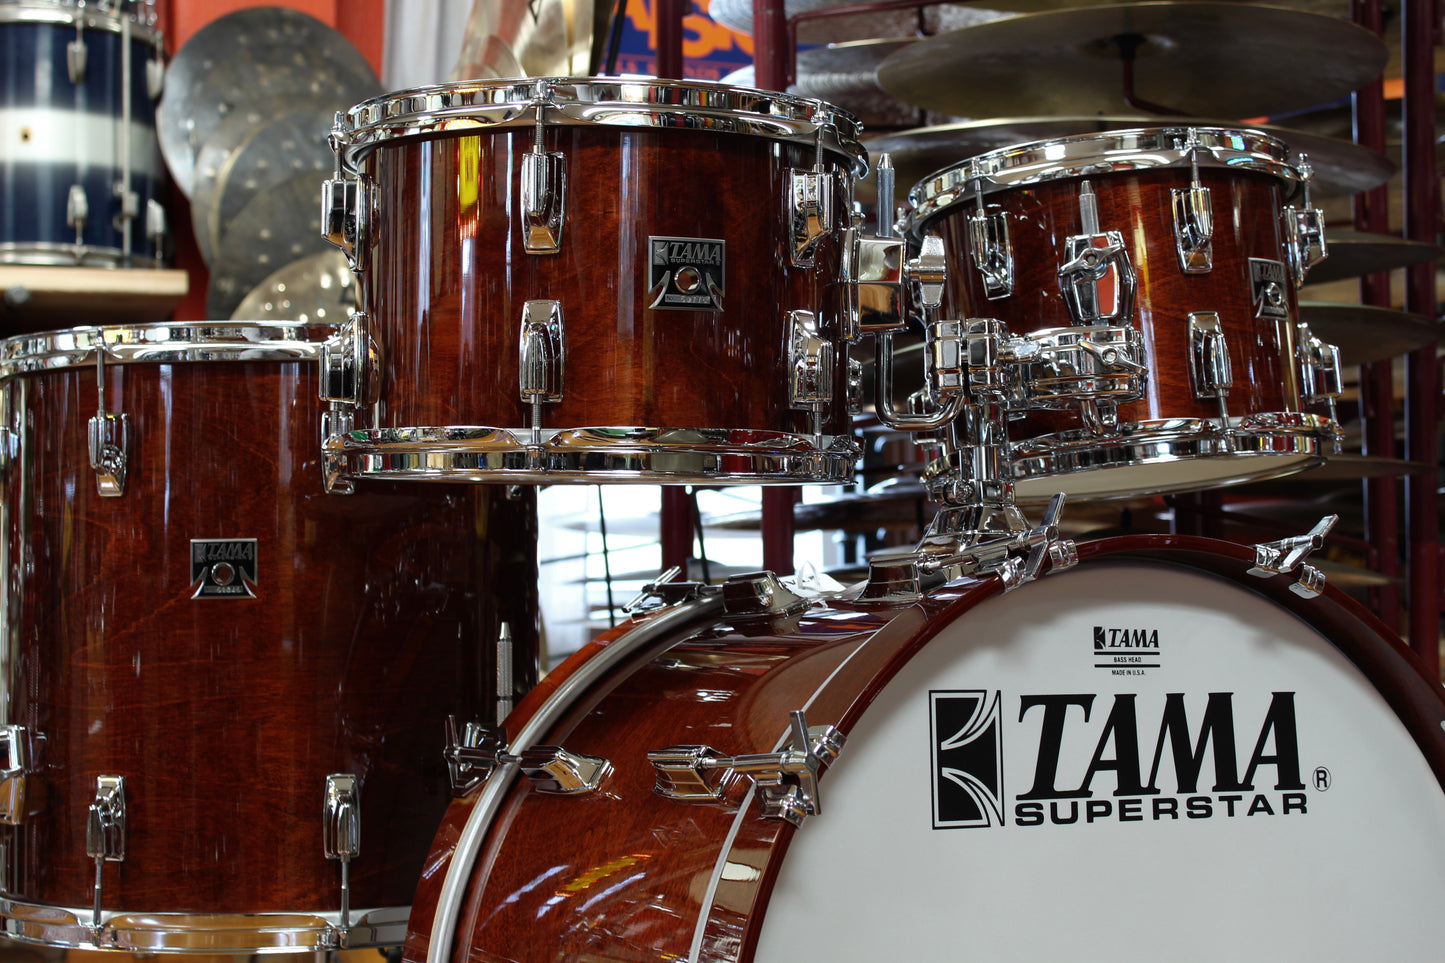 Tama 50th Anniversary Limited Edition Superstar Reissue Drum Kit - Super Mahogany